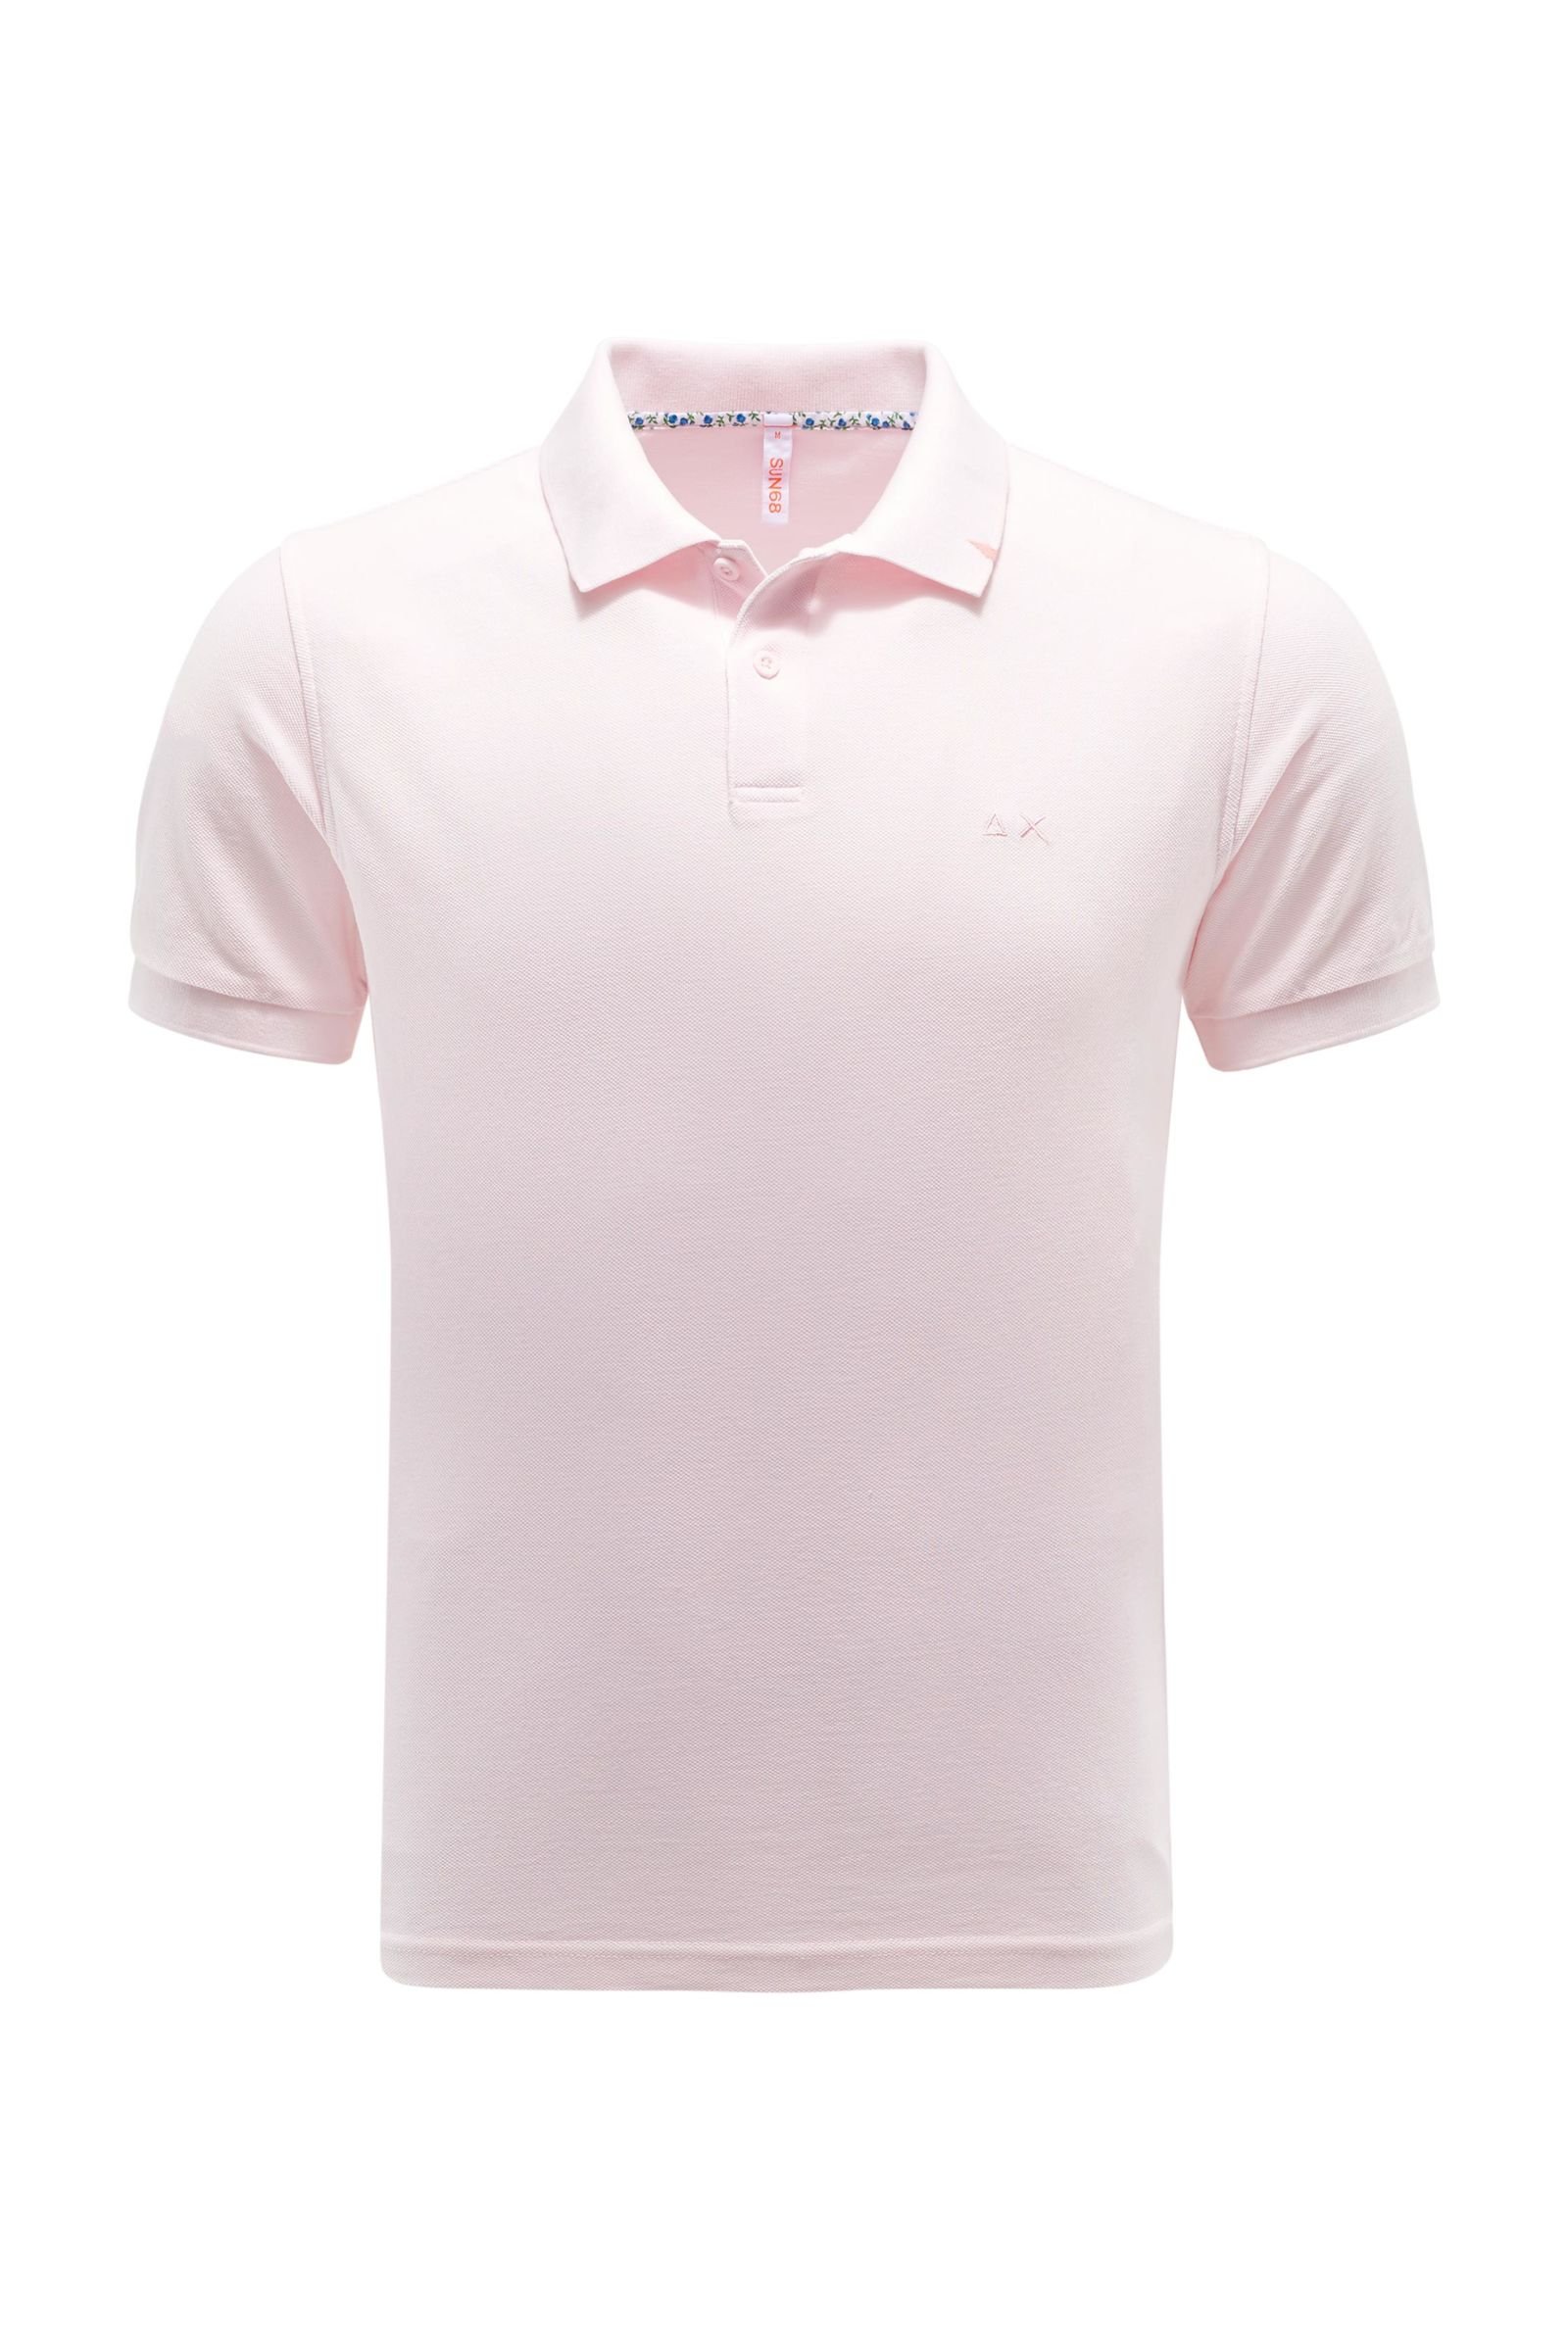 Polo shirt in rosé